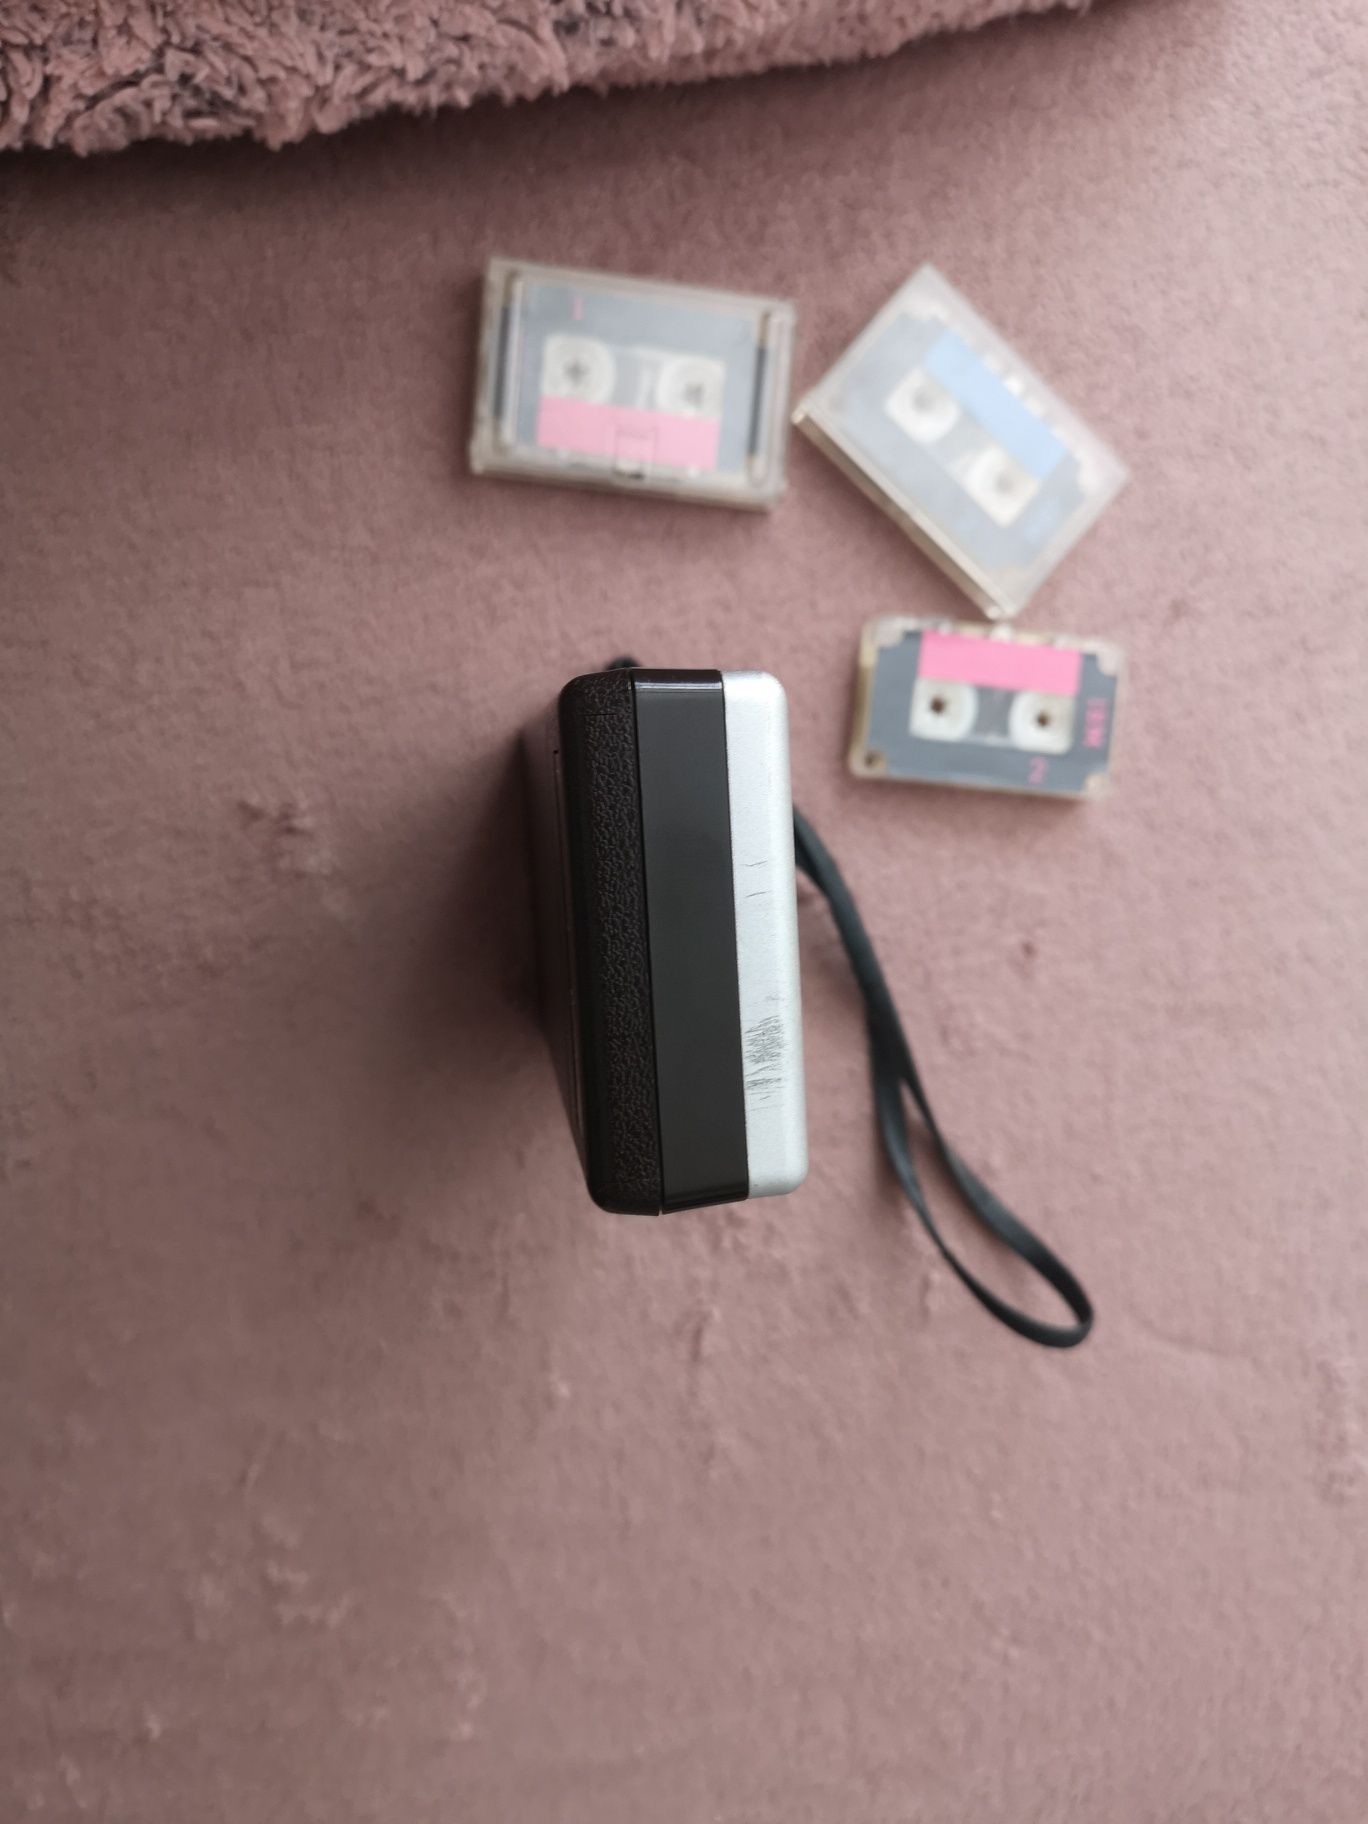 Dyktafon Norcom kaseta kasety